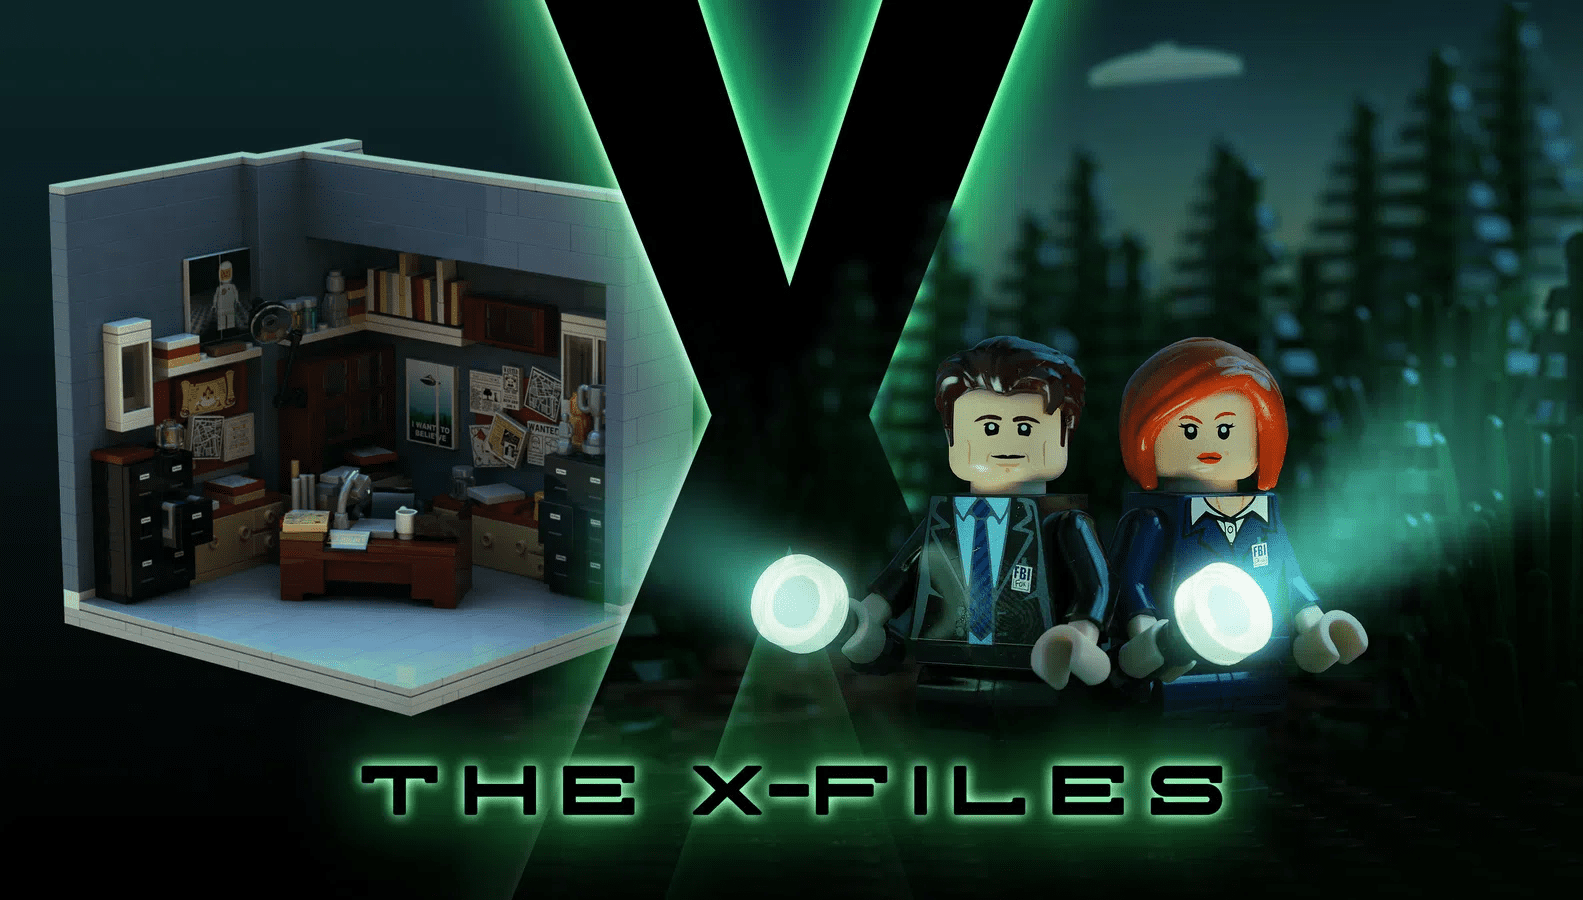 LEGO Ideas X-Files